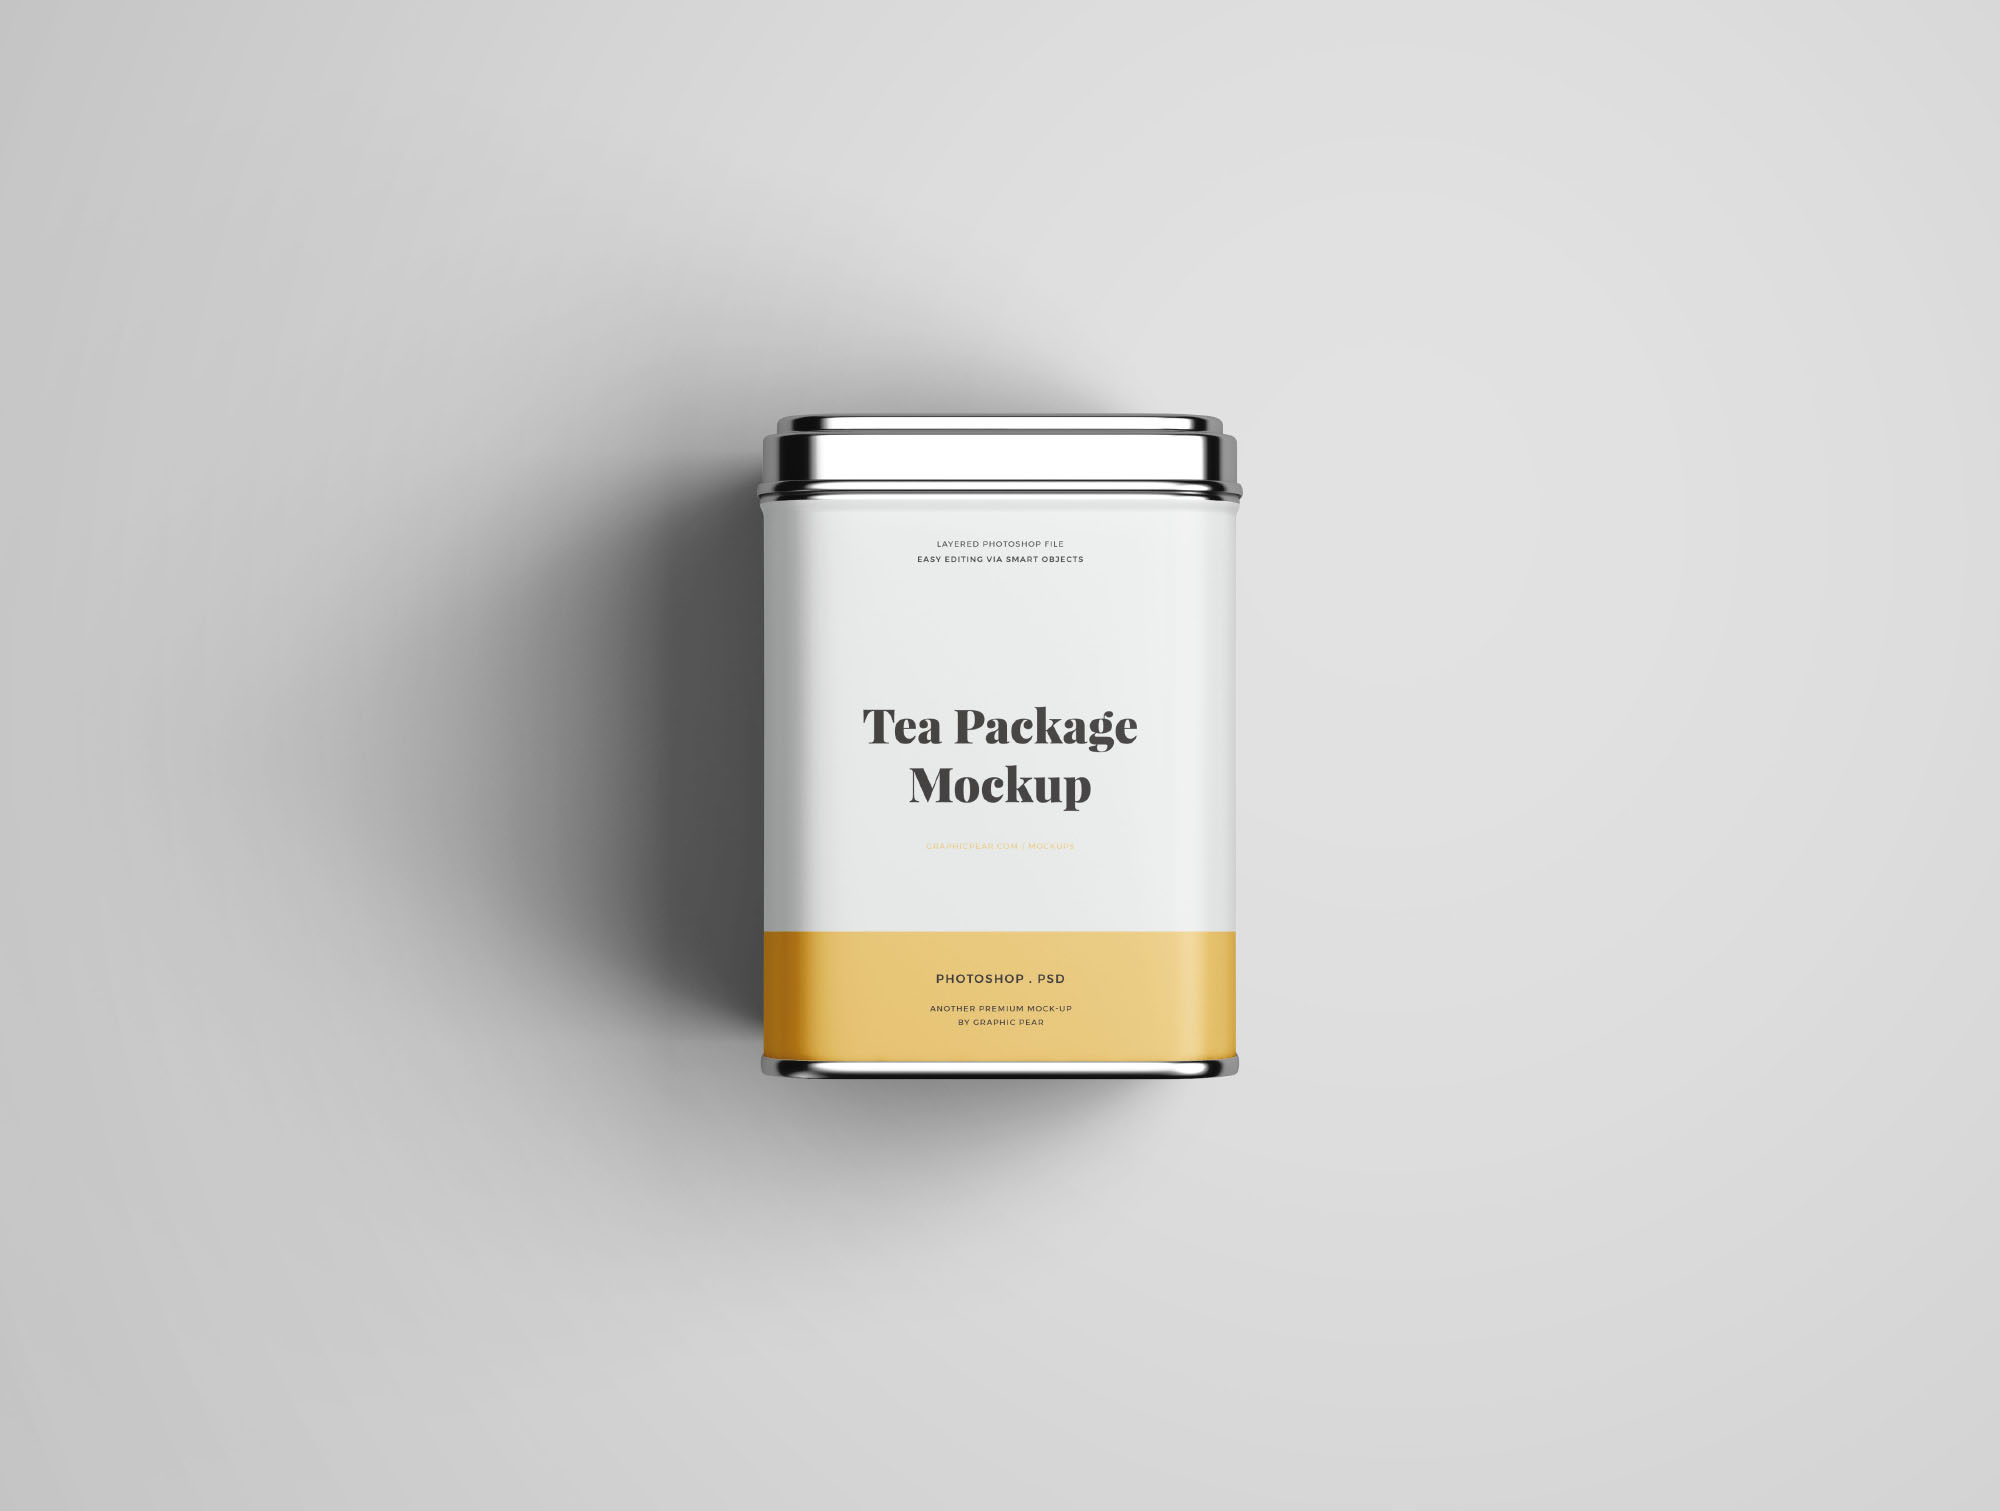 茶叶铁盒包装设计效果样机 Tea Package Mockup插图(5)